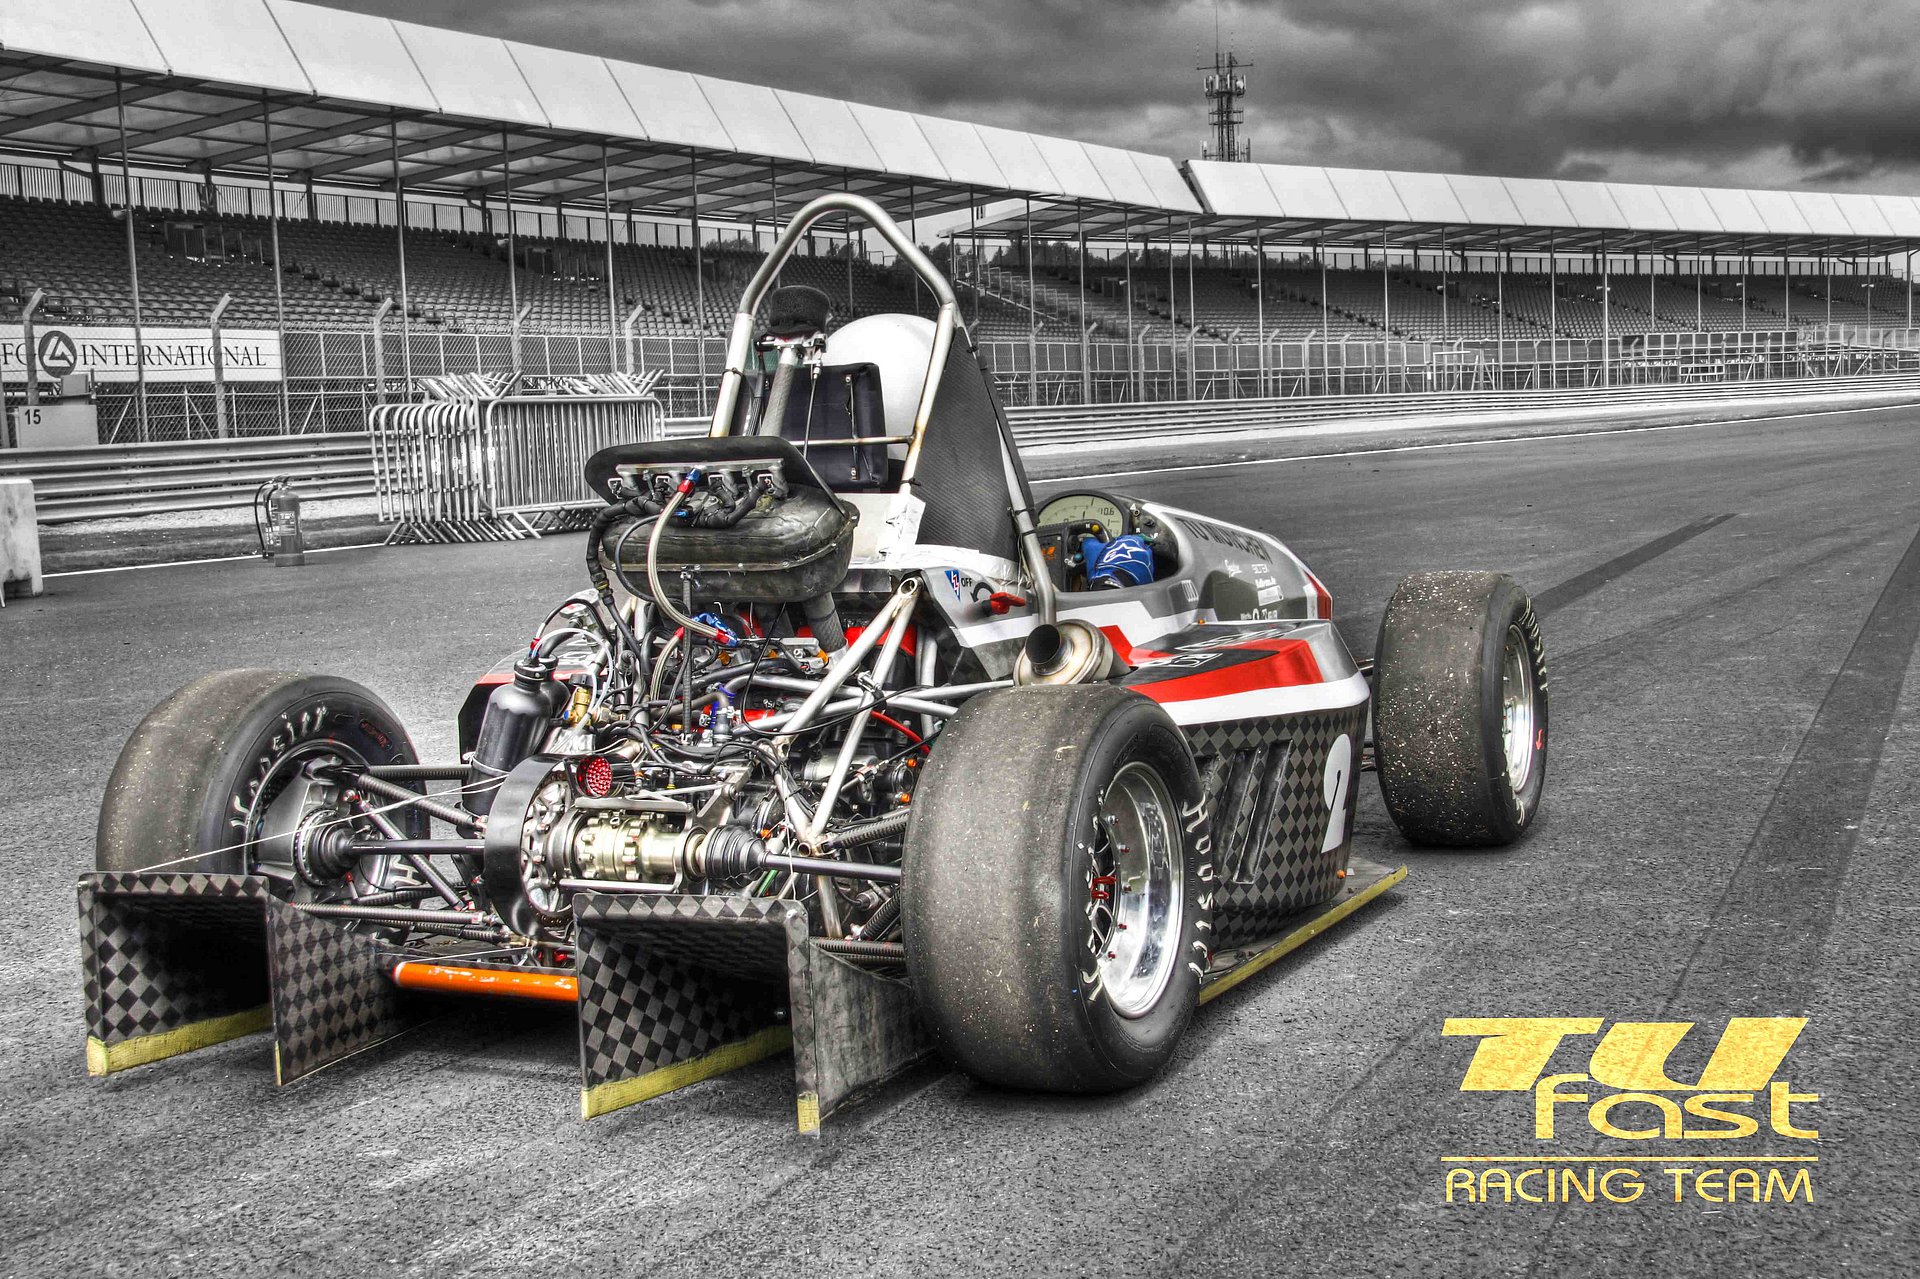 Racing car nb012 (photo: Raul Marksteiner/TUfast Racing Team)